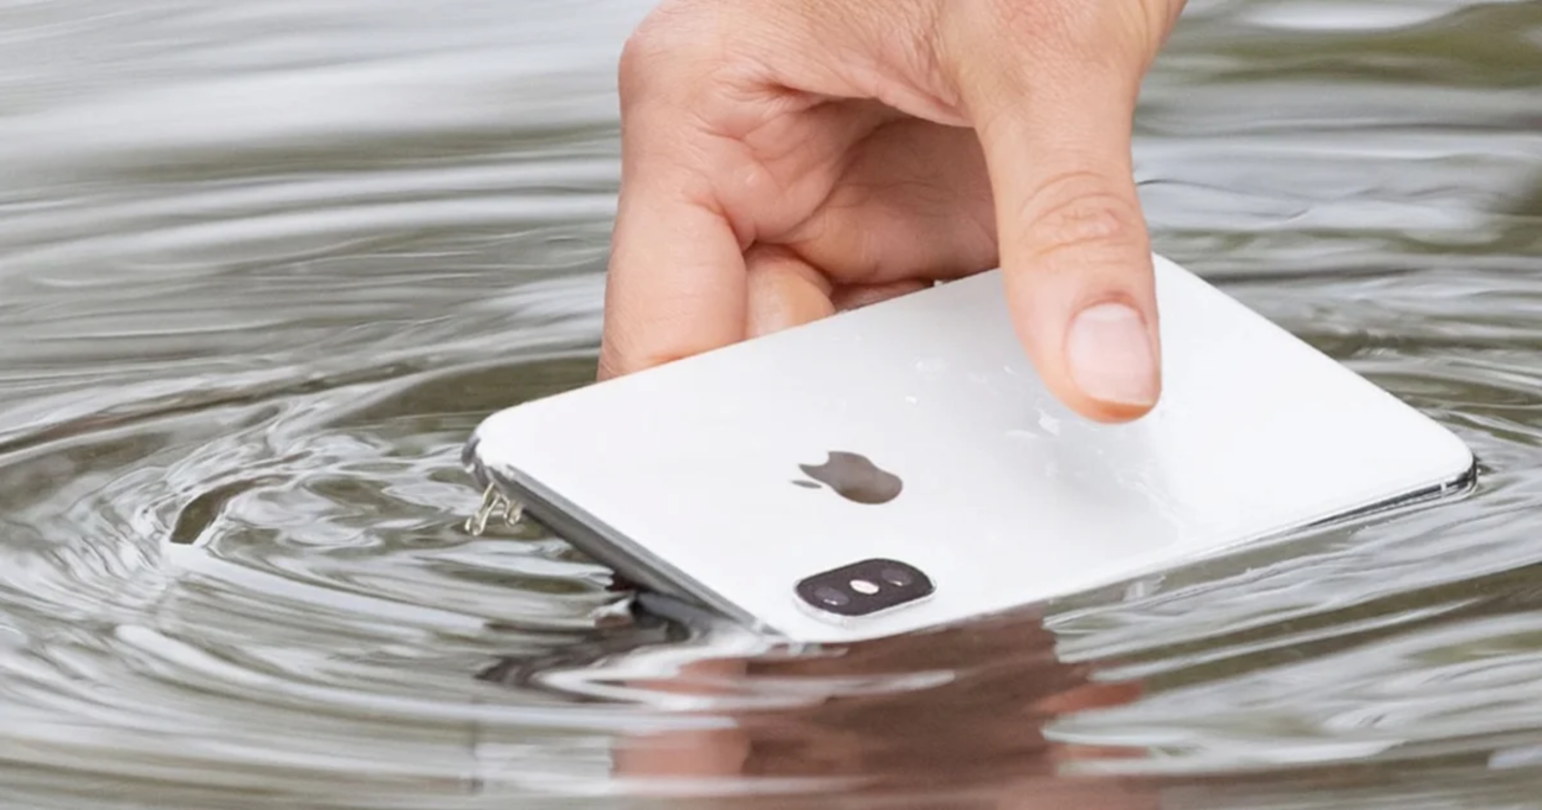 iPhone Bajo el Agua